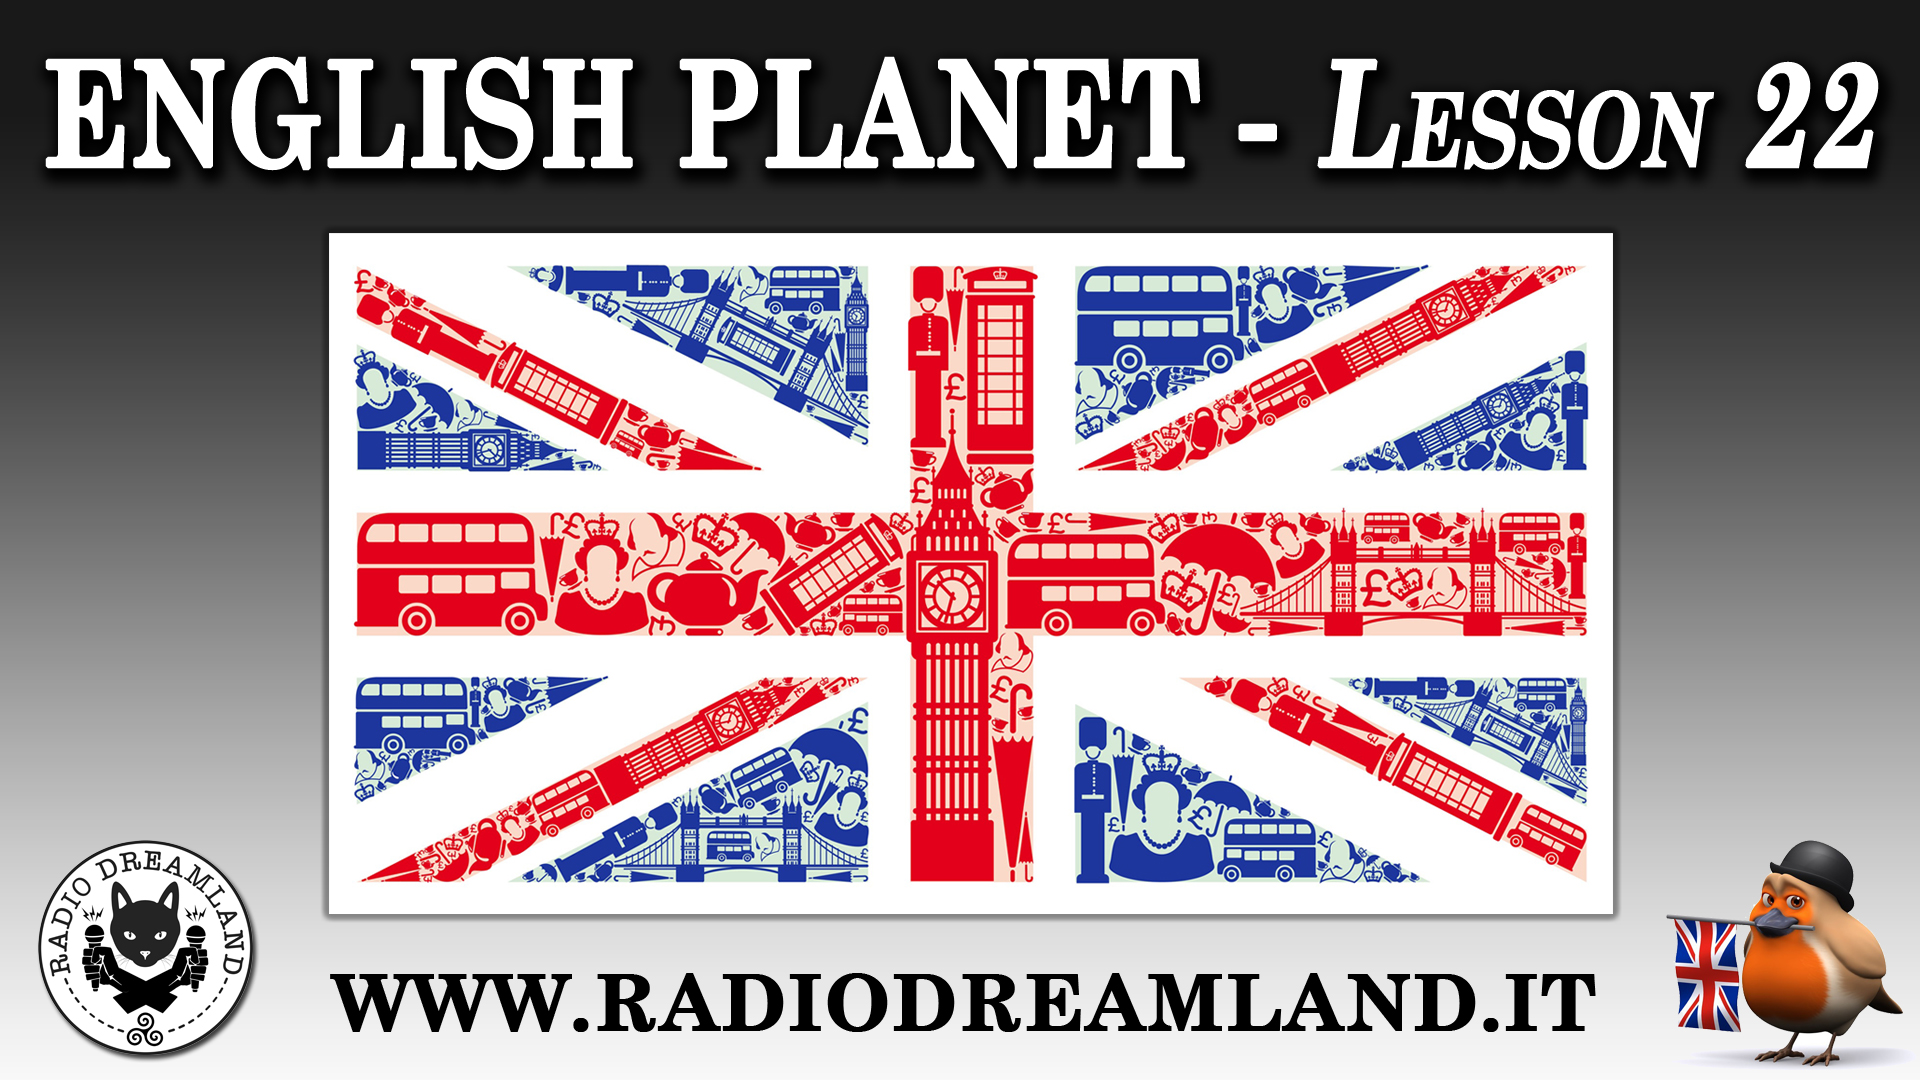 Radio Dreamland - English Planet